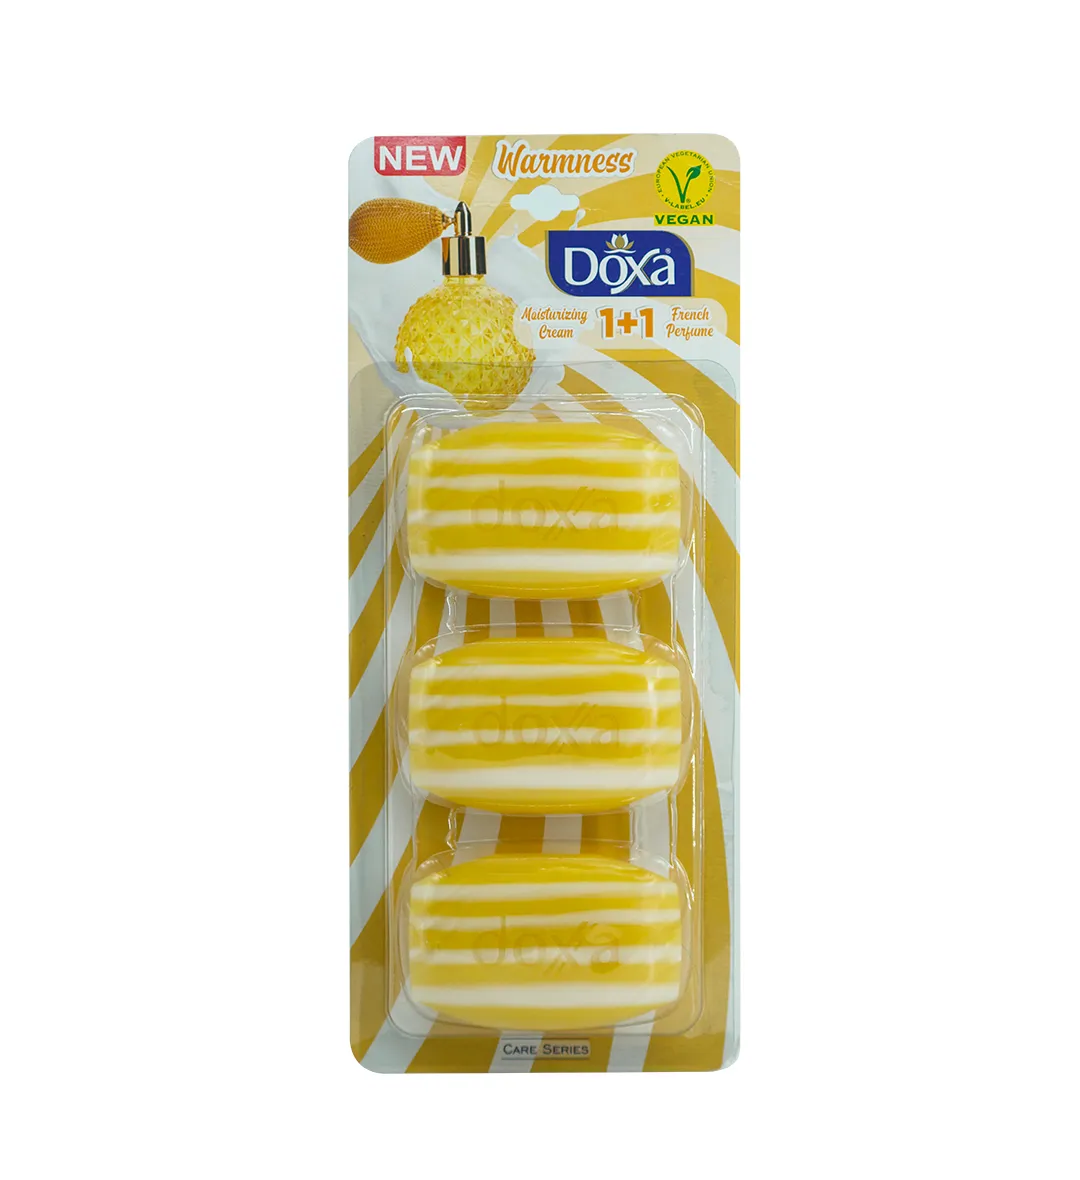 Doxa 90 Gr X 3 ( 1+1) Blister Beauty Soap With Moisturizing Cream Care Series Warmness